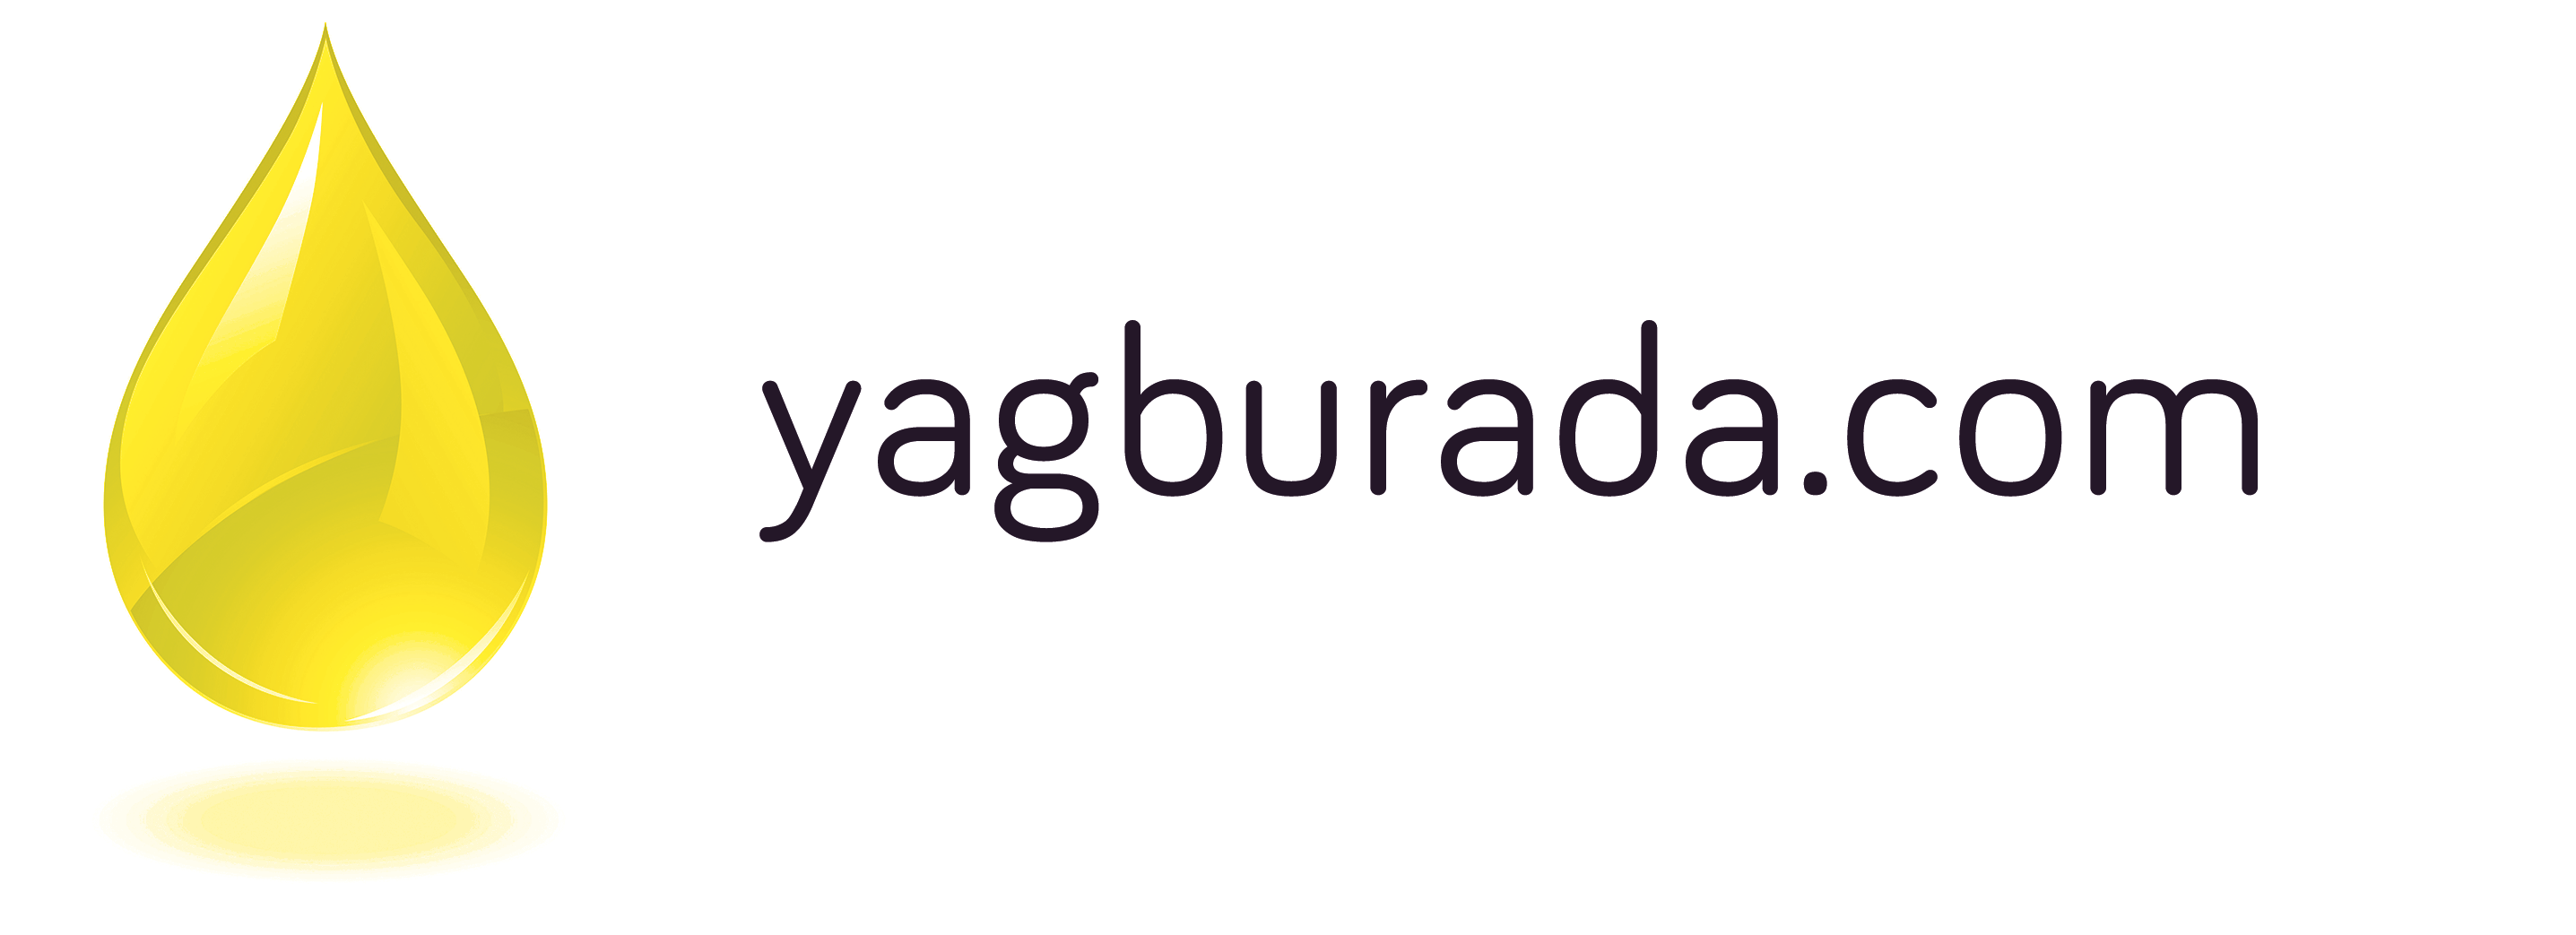 www.yagburada.com